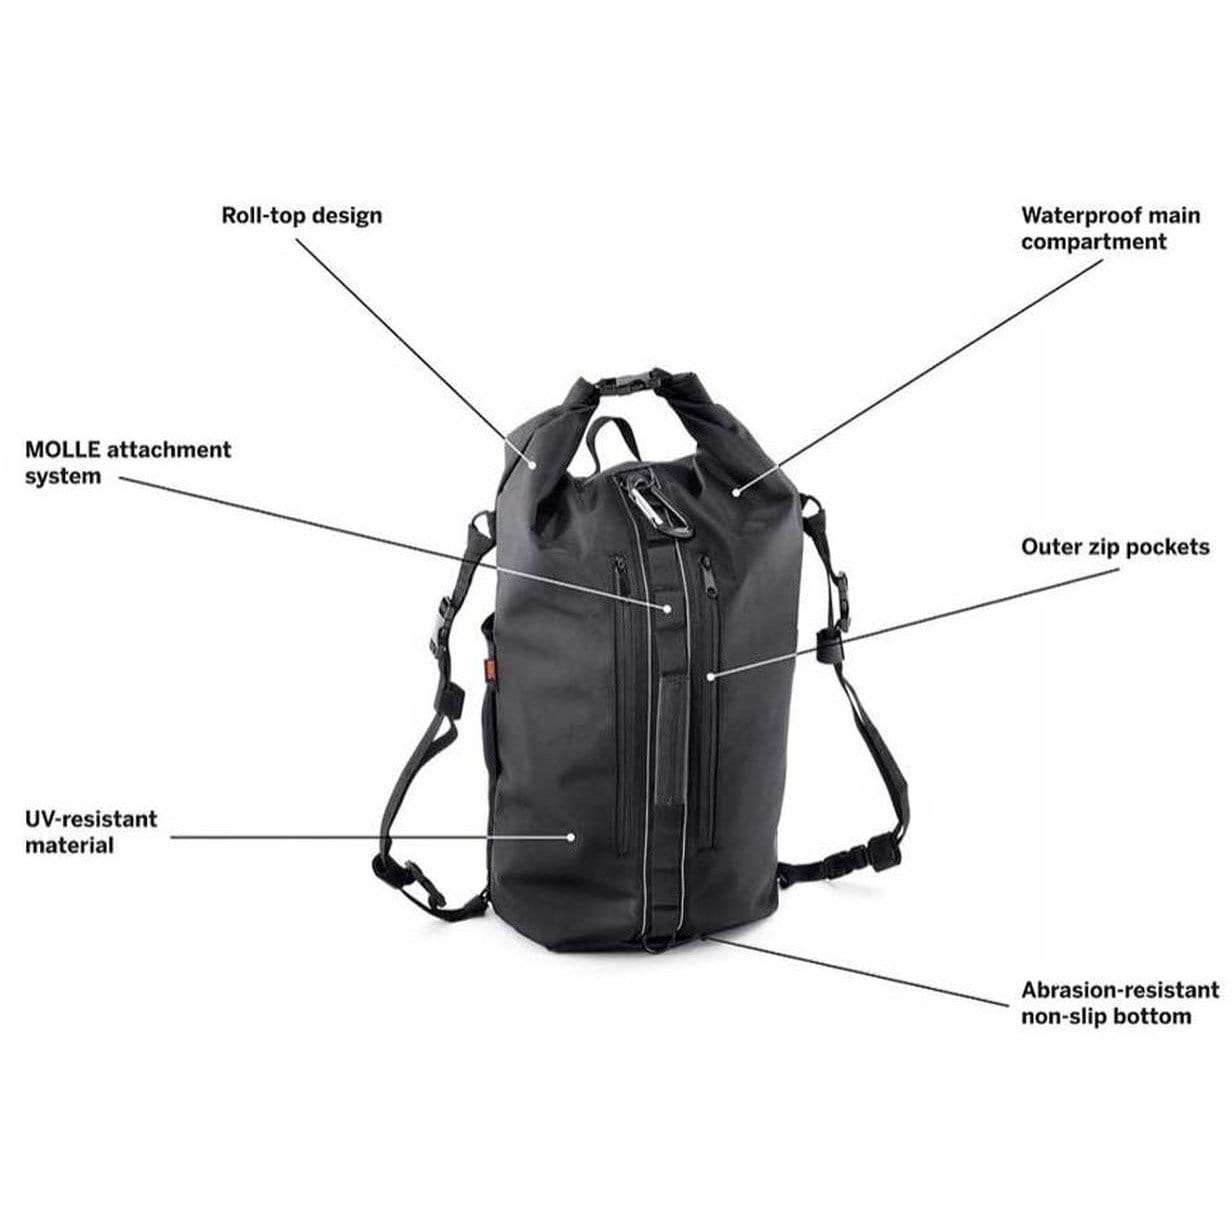 Harley-Davidson® Overwatch Dry Water-Resistant Bag, Universal Fit- Black